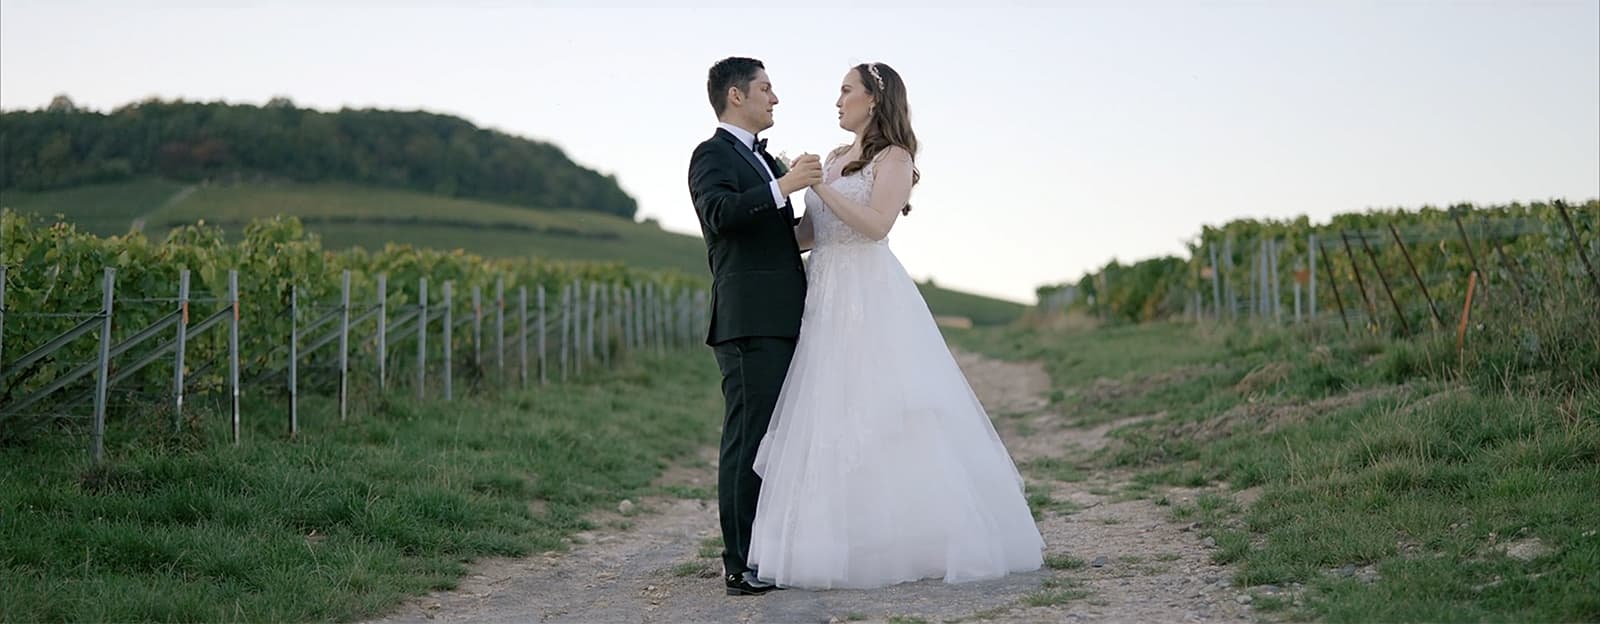 videaste mariage reims danse vigne